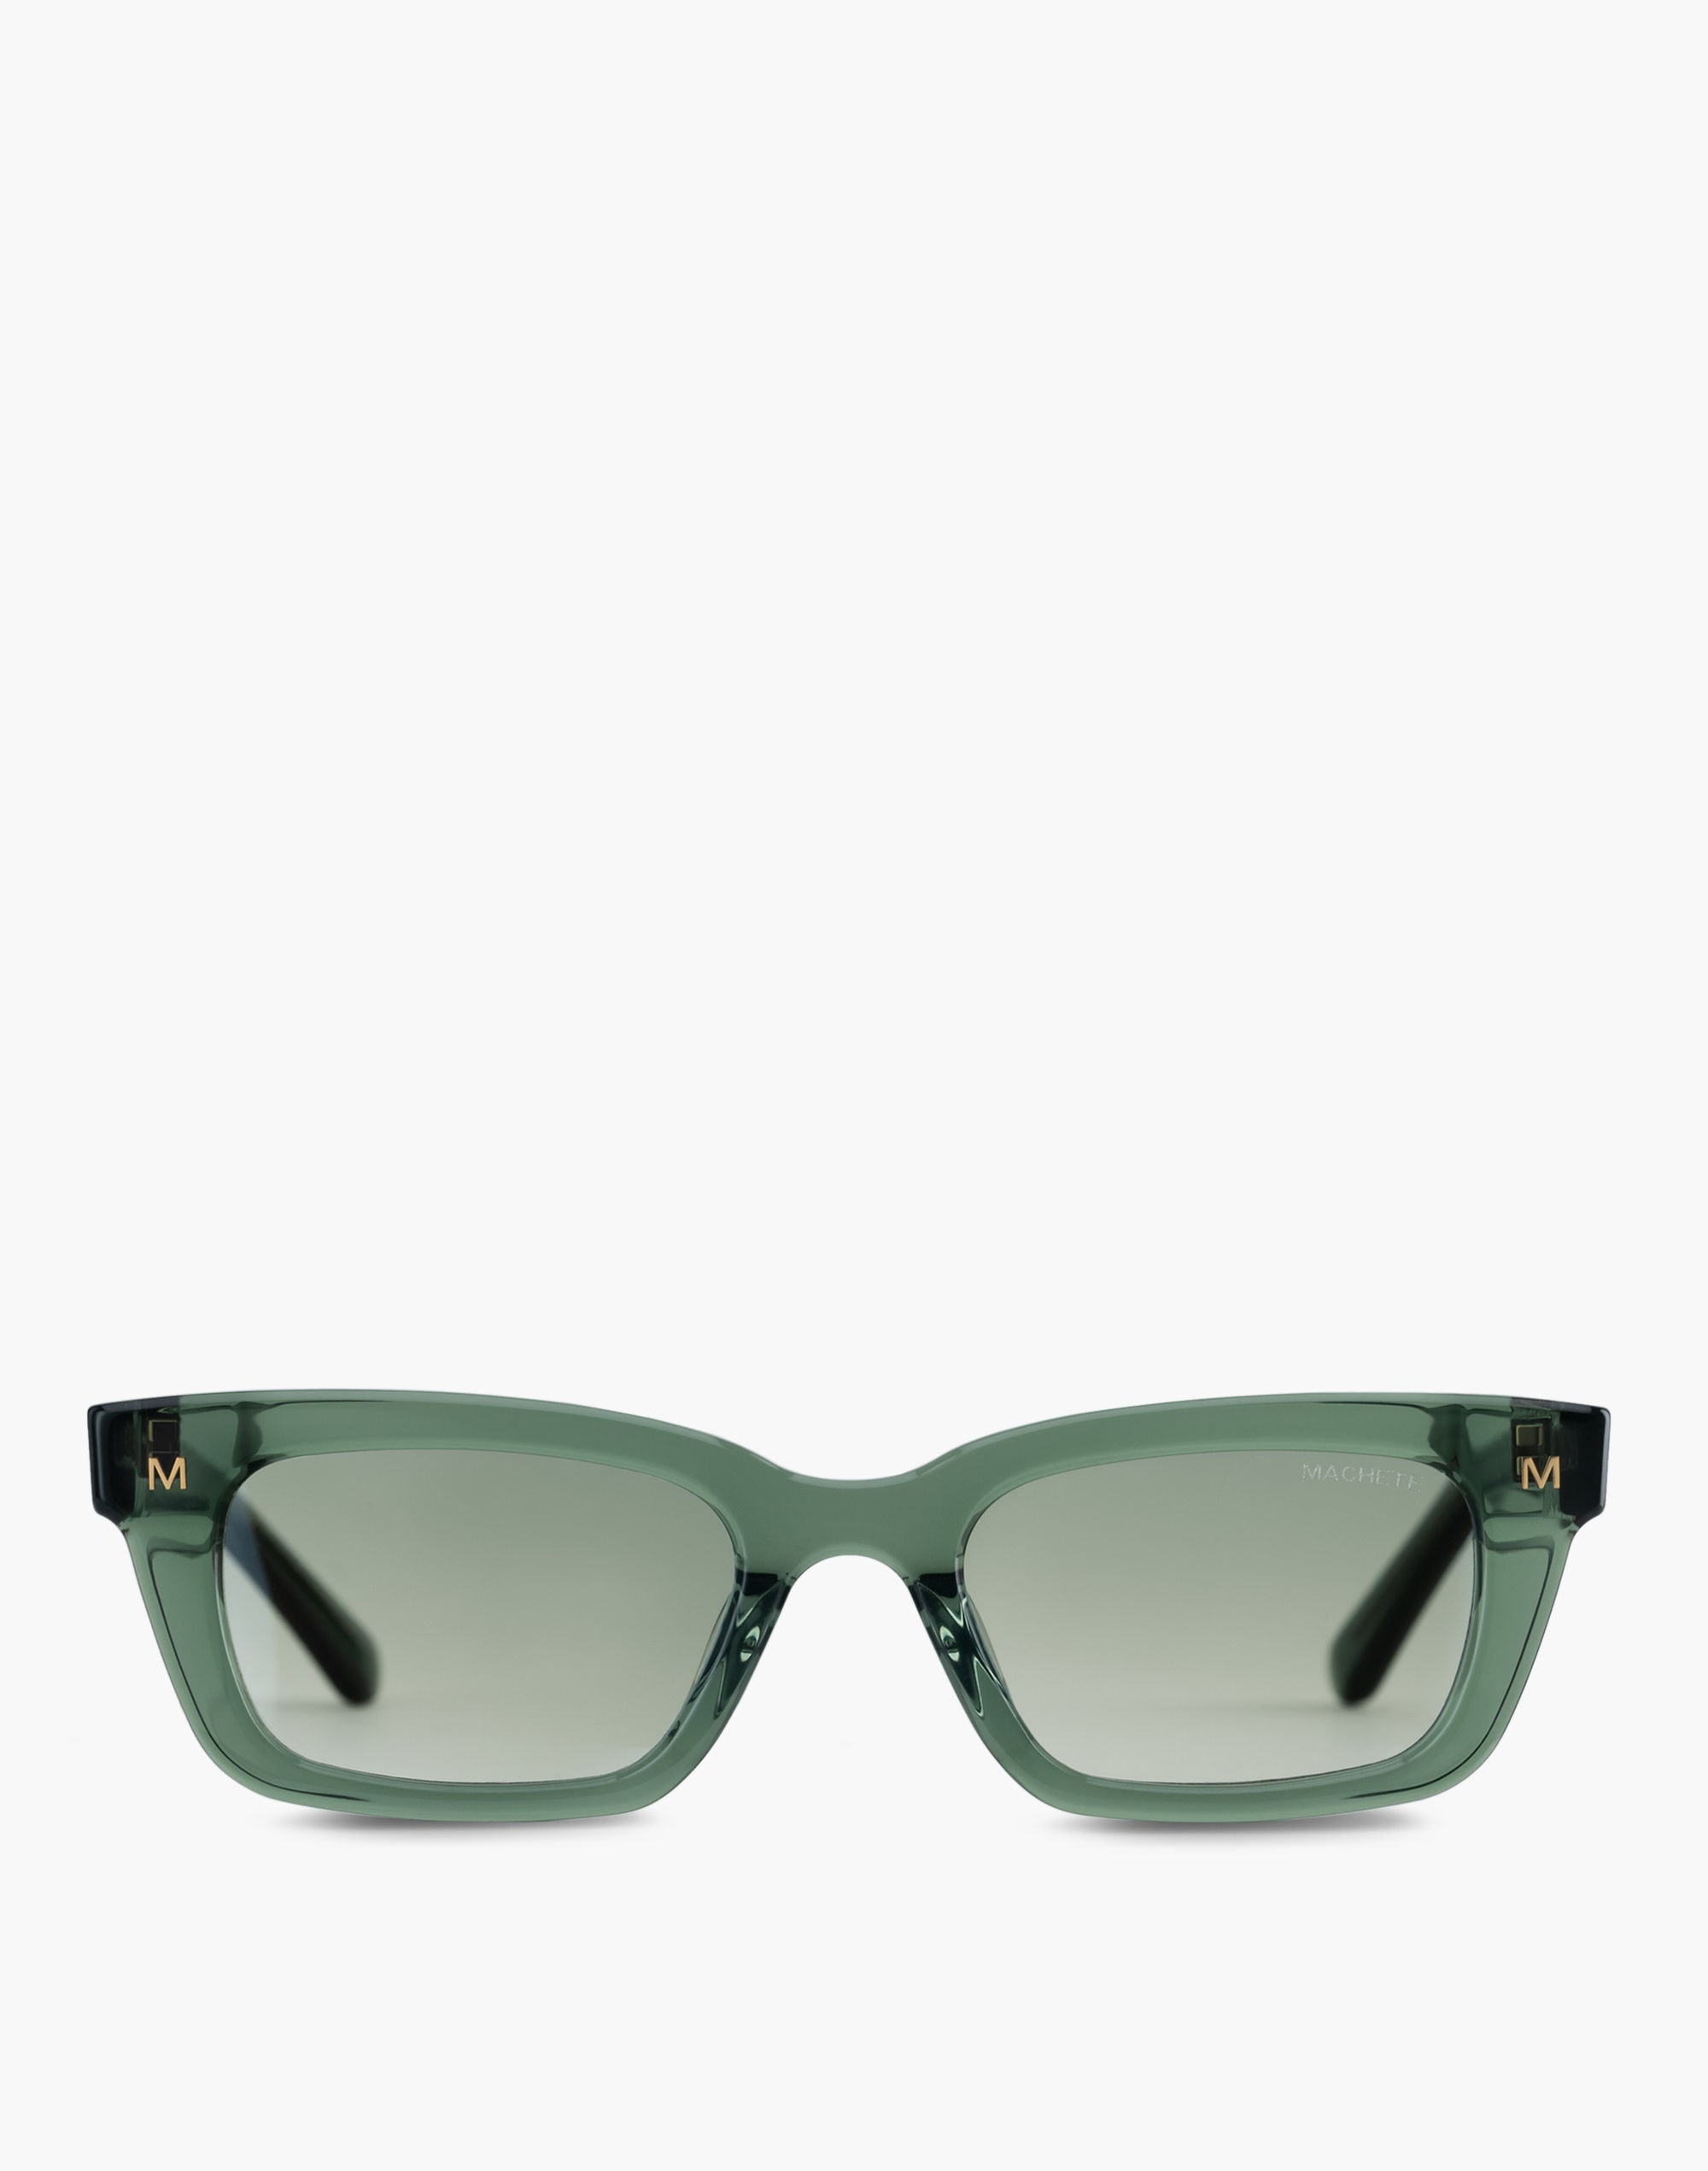 Mw Machete Ruby Sunglasses In Green